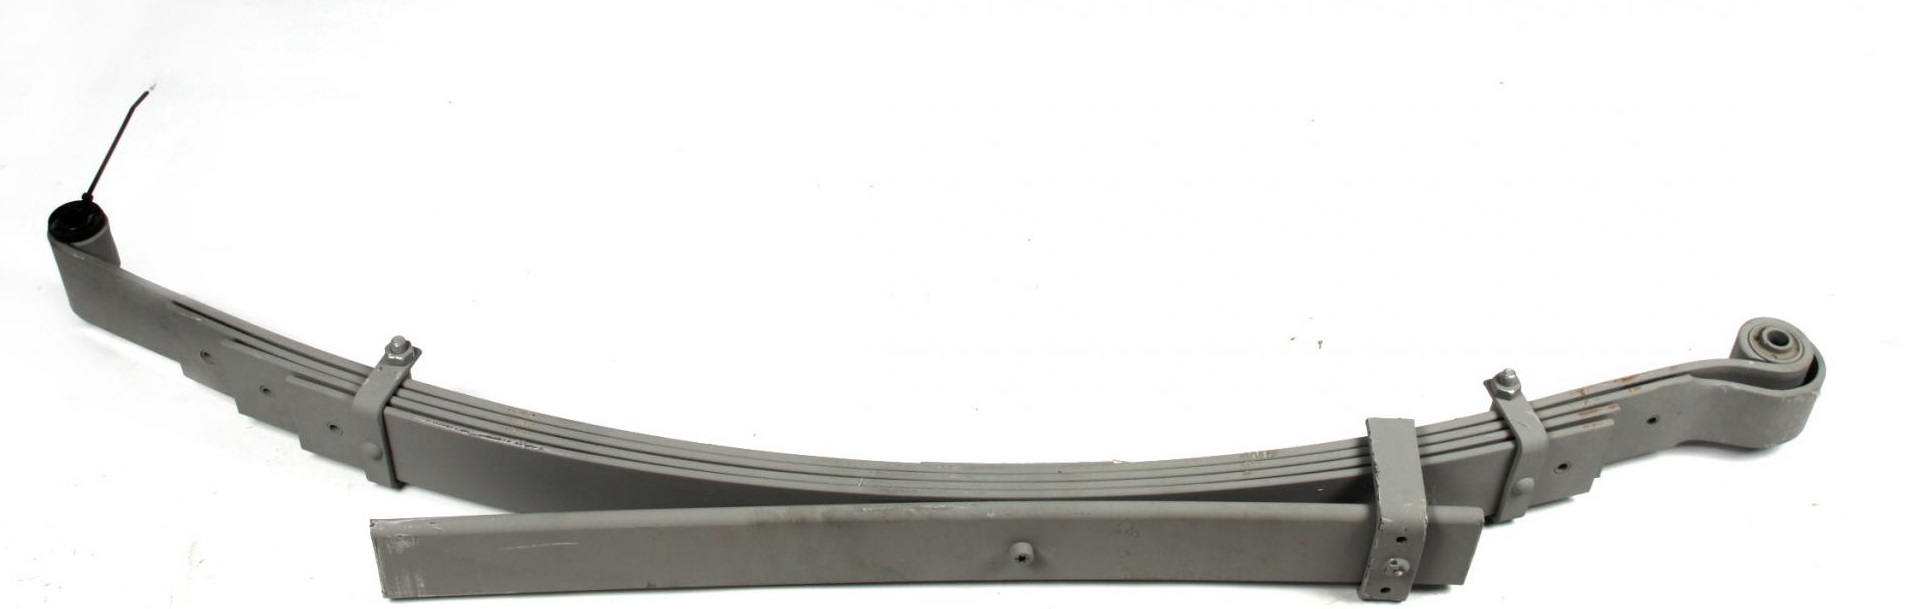 Рессора задняя Mitsubishi L 200 05- (комплект 5 листов) (70/520/690) (1/7mm+3/6mm+1/13mm)